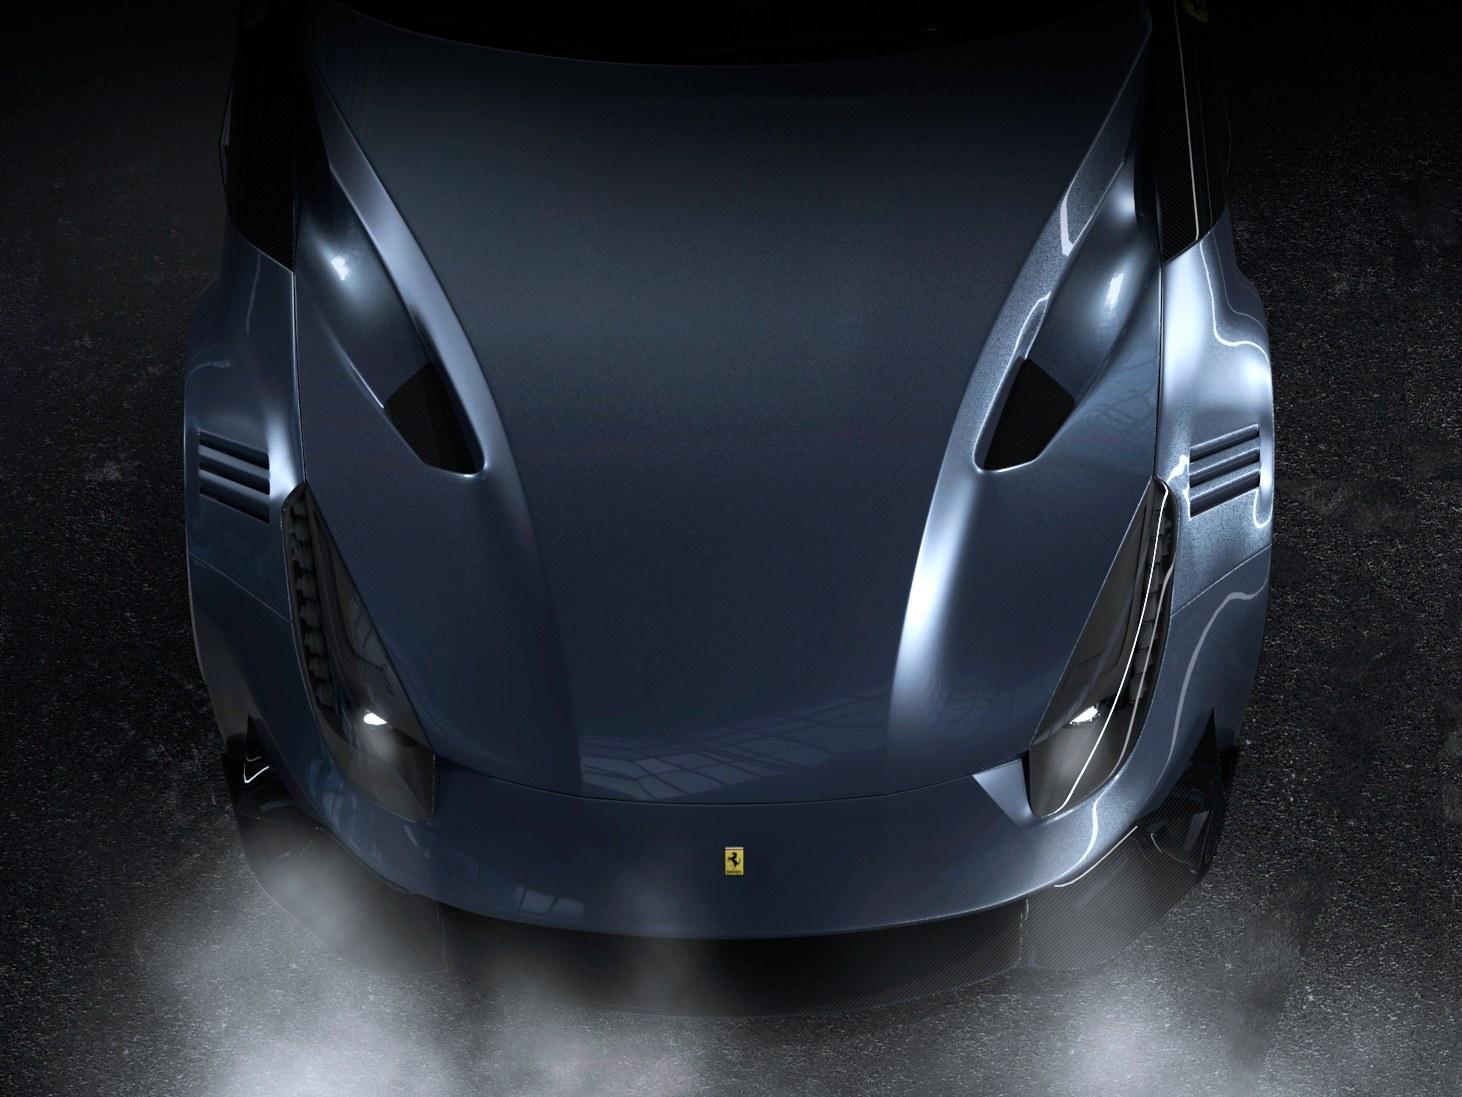 Lamborghini's Aventador S Is a More Driveable Supercar